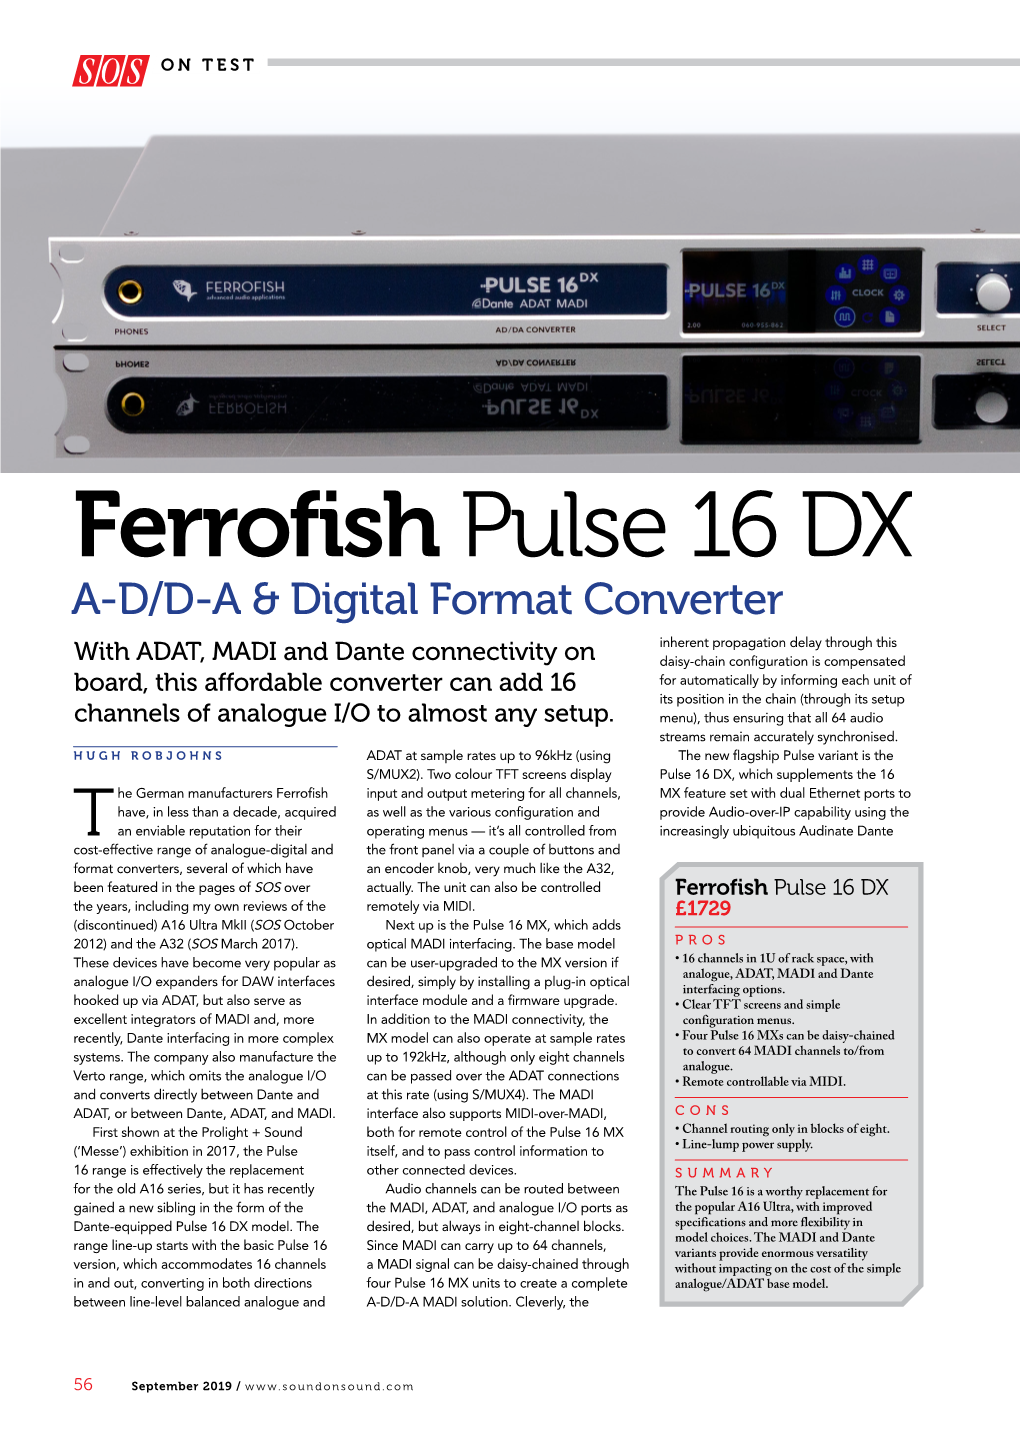 Ferrofish Pulse 16 DX